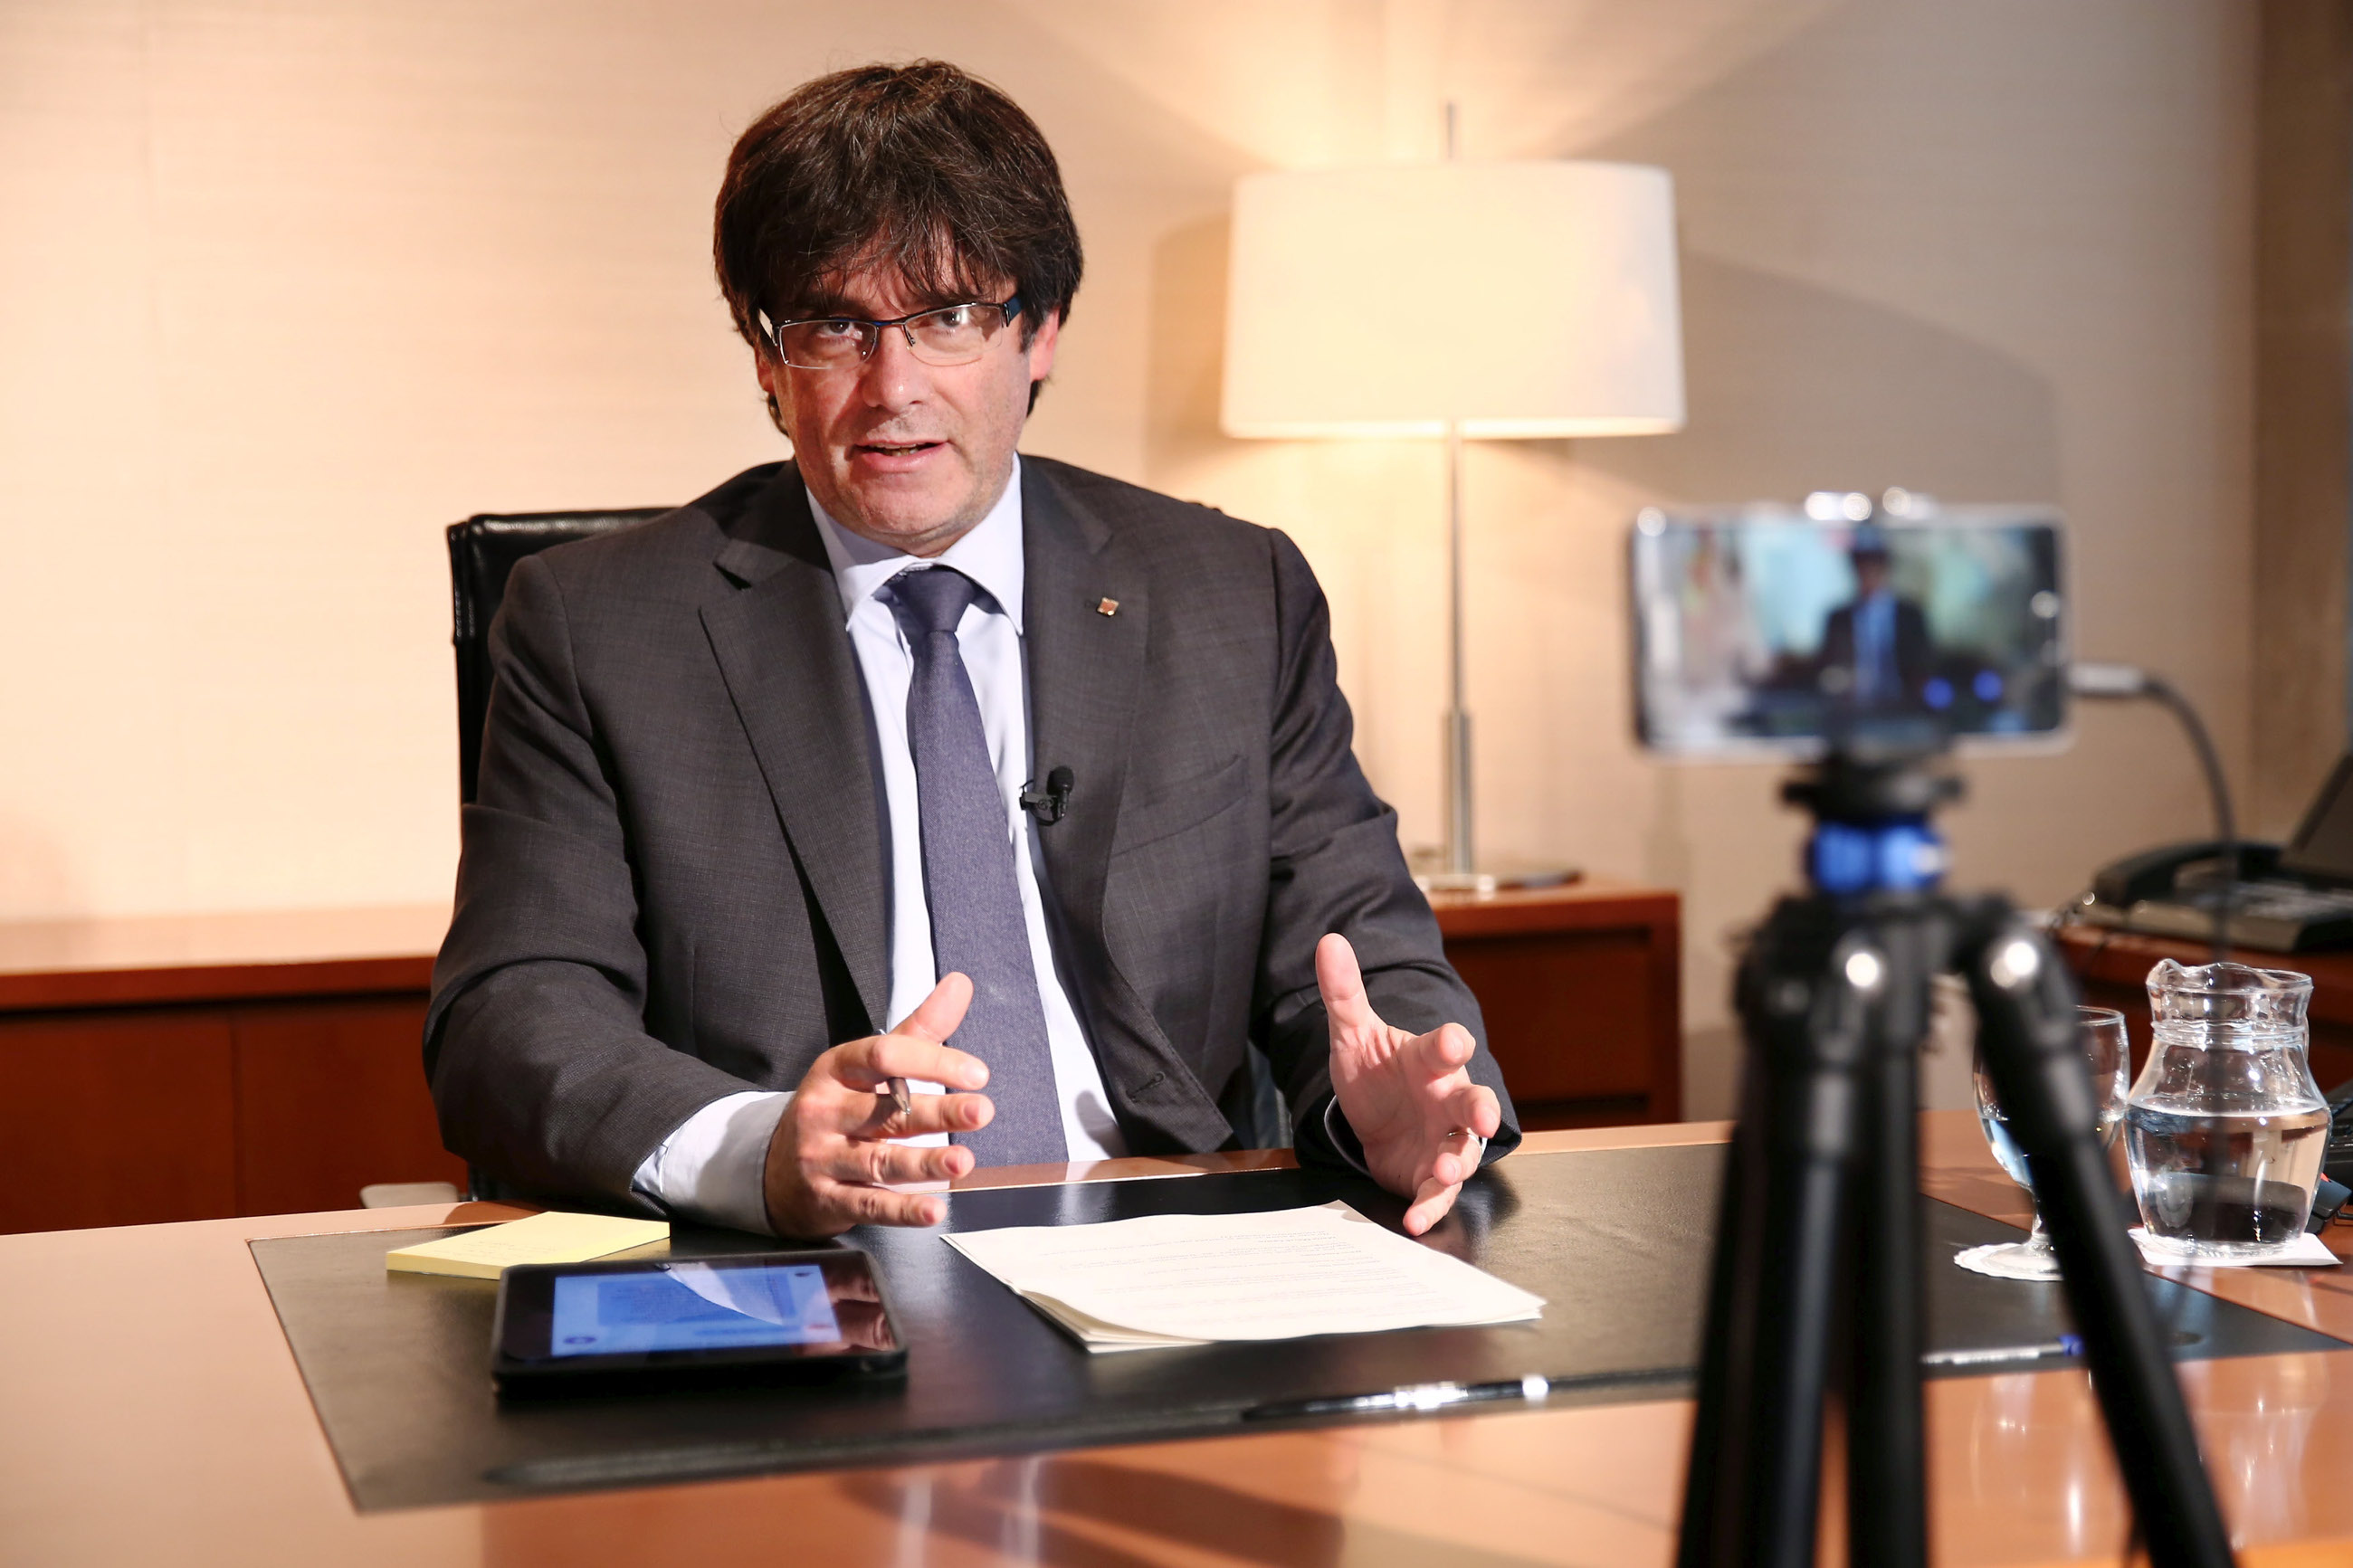 Puigdemont during the on-line chat (by Jordi Bedmar/Generalitat de Catalunya)